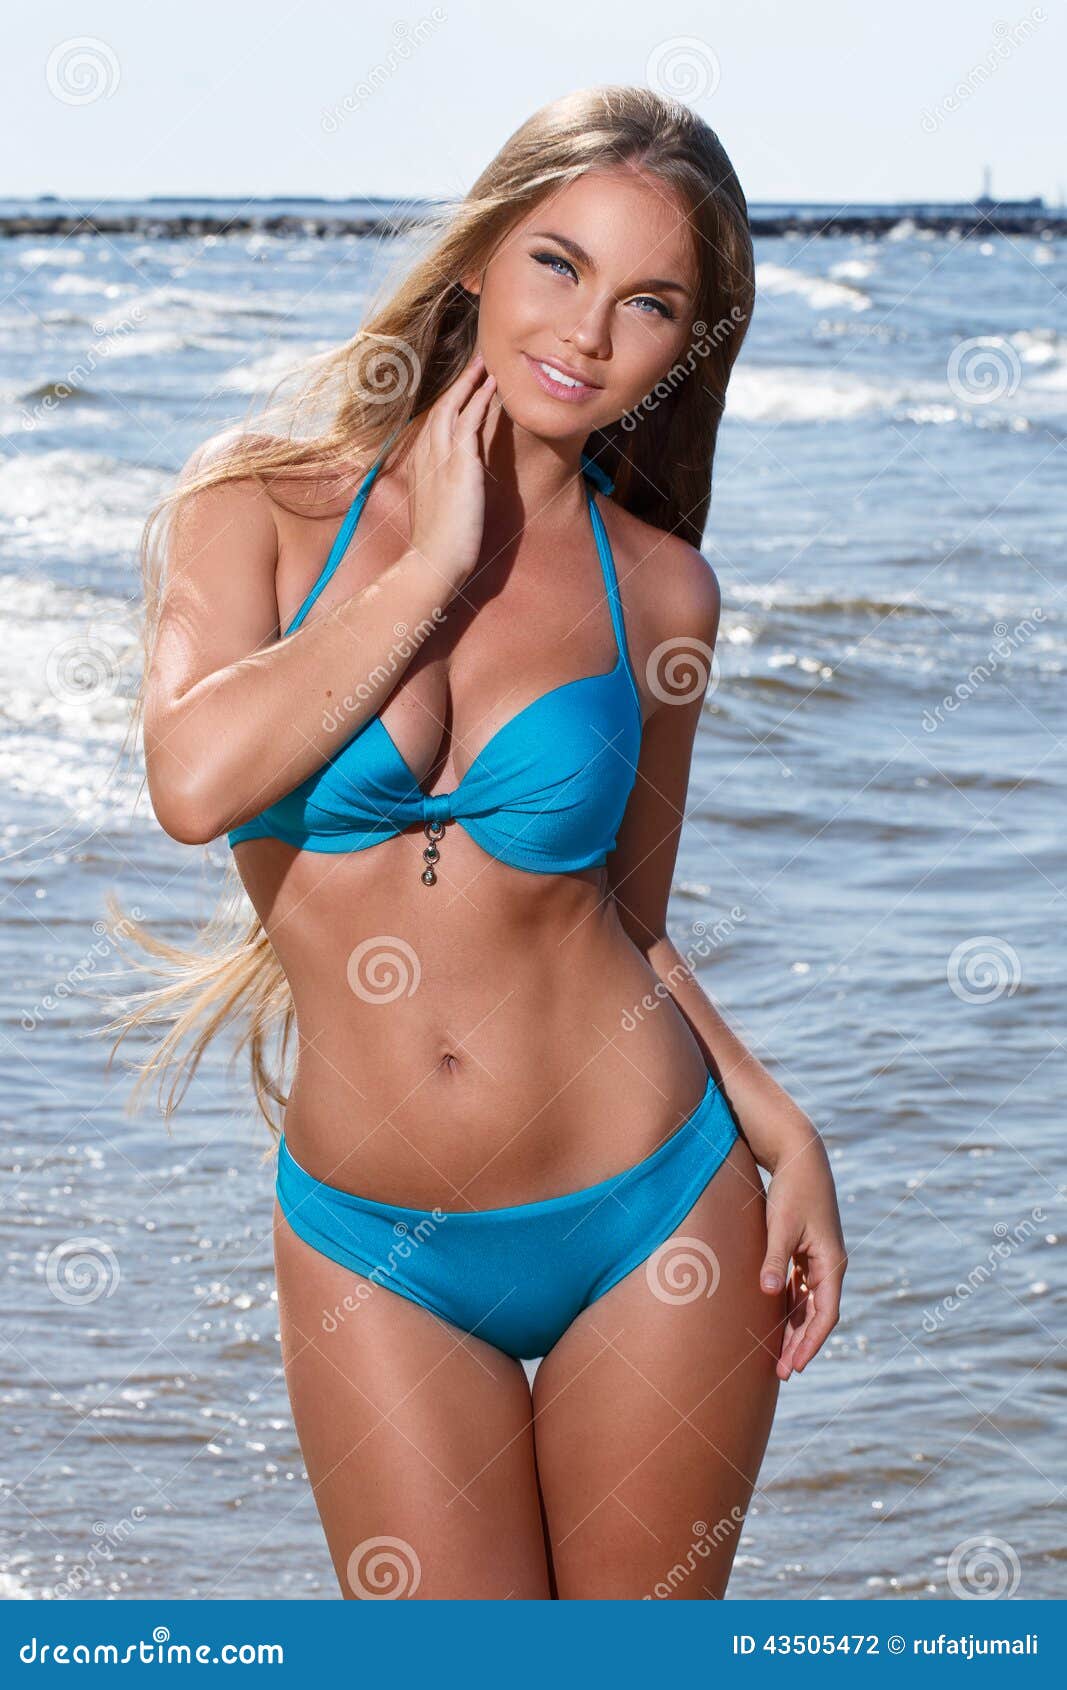 adrianne nutt share sexy chicks on the beach photos